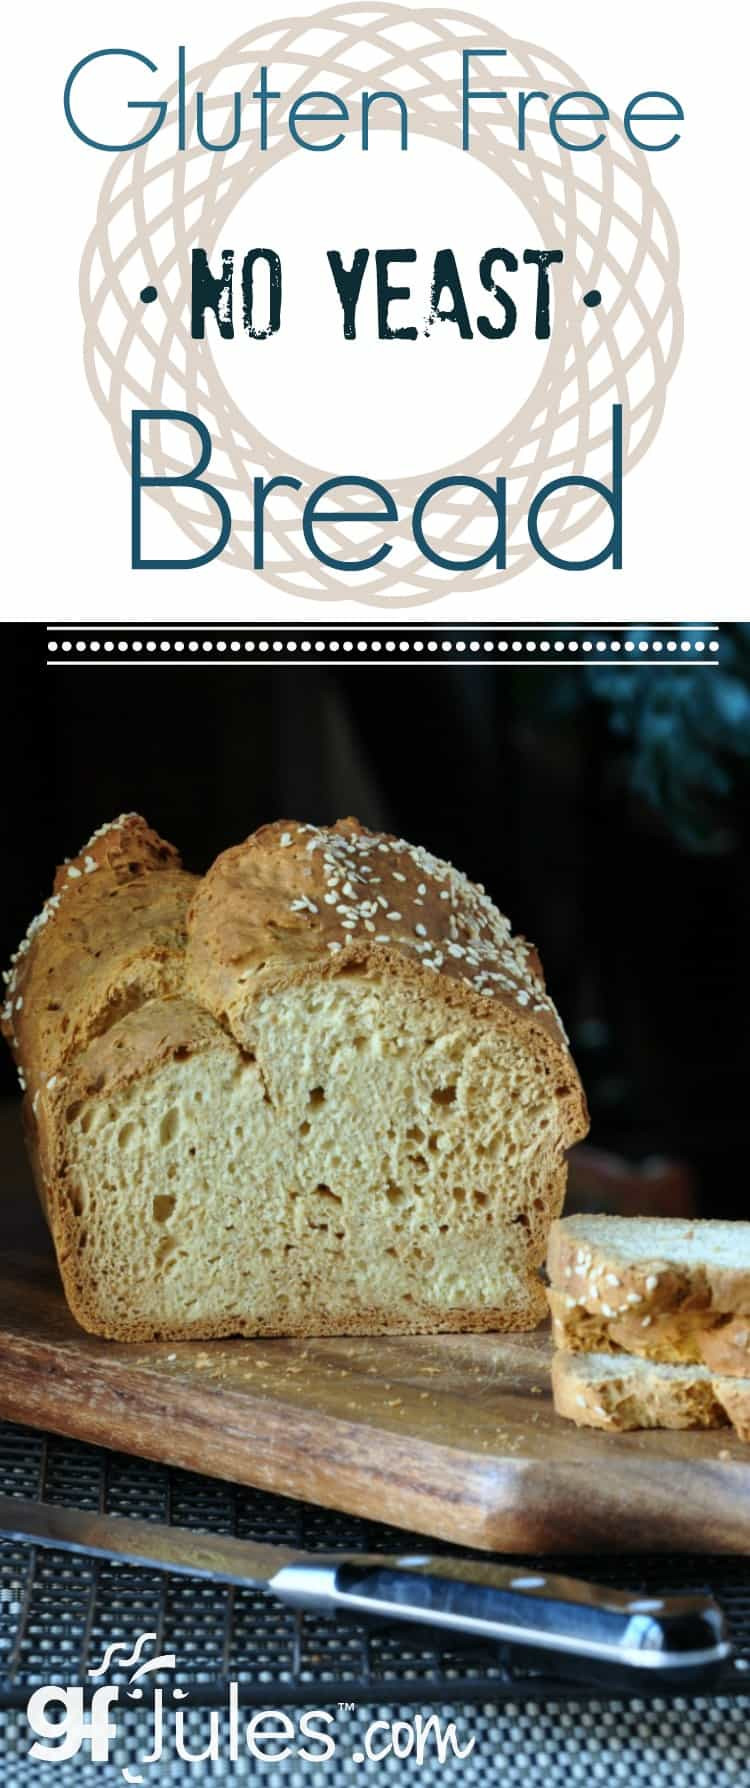 Udi'S Gluten Free Bread Ingredients
 Gluten Free No Yeast Bread Recipe for Sandwiches gfJules